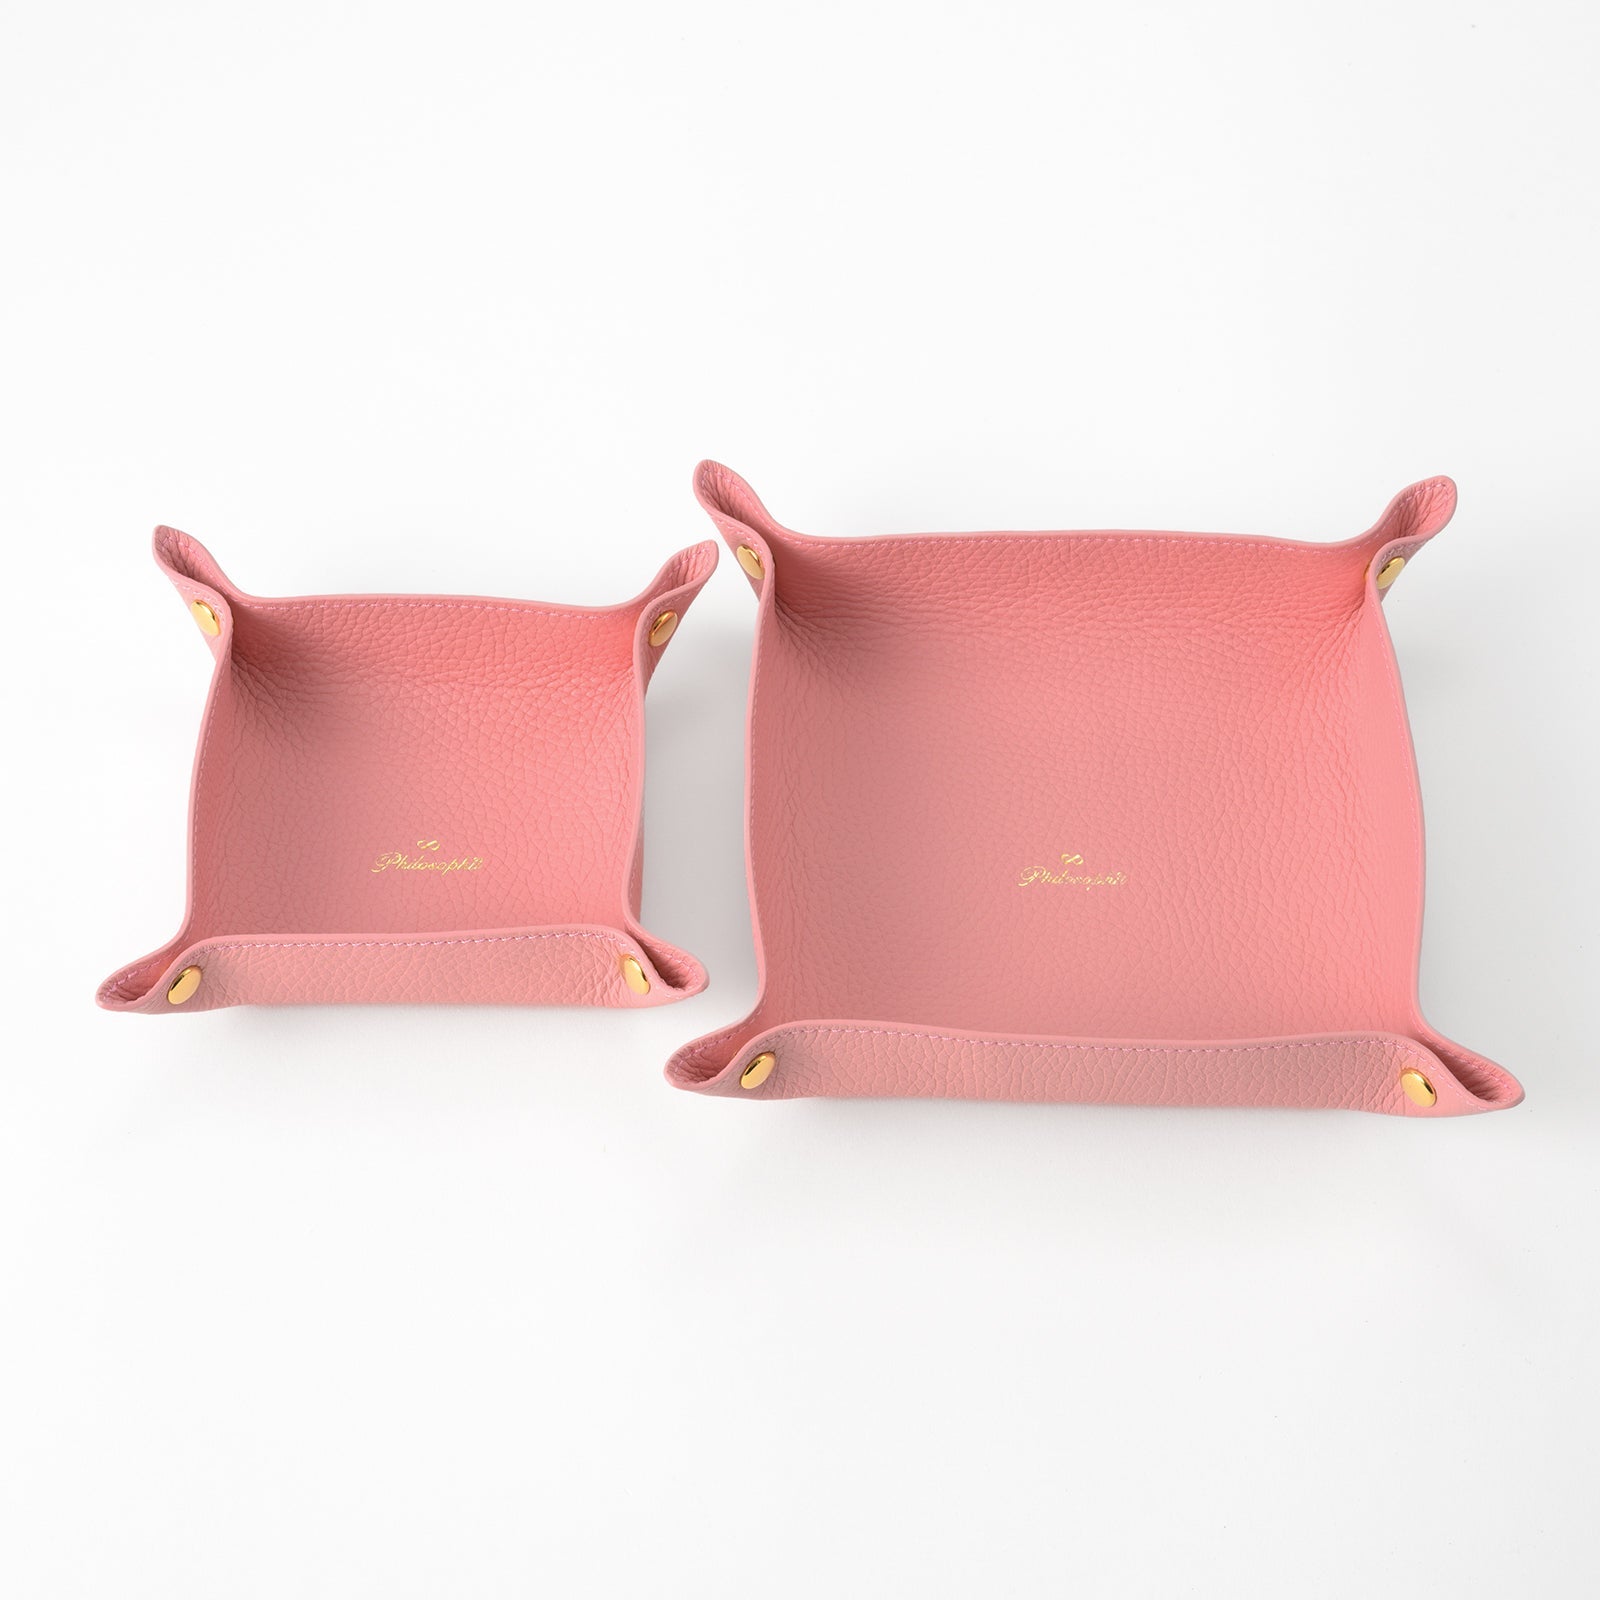 Leather Tray 20 Cuir Mache / Sakura Pink